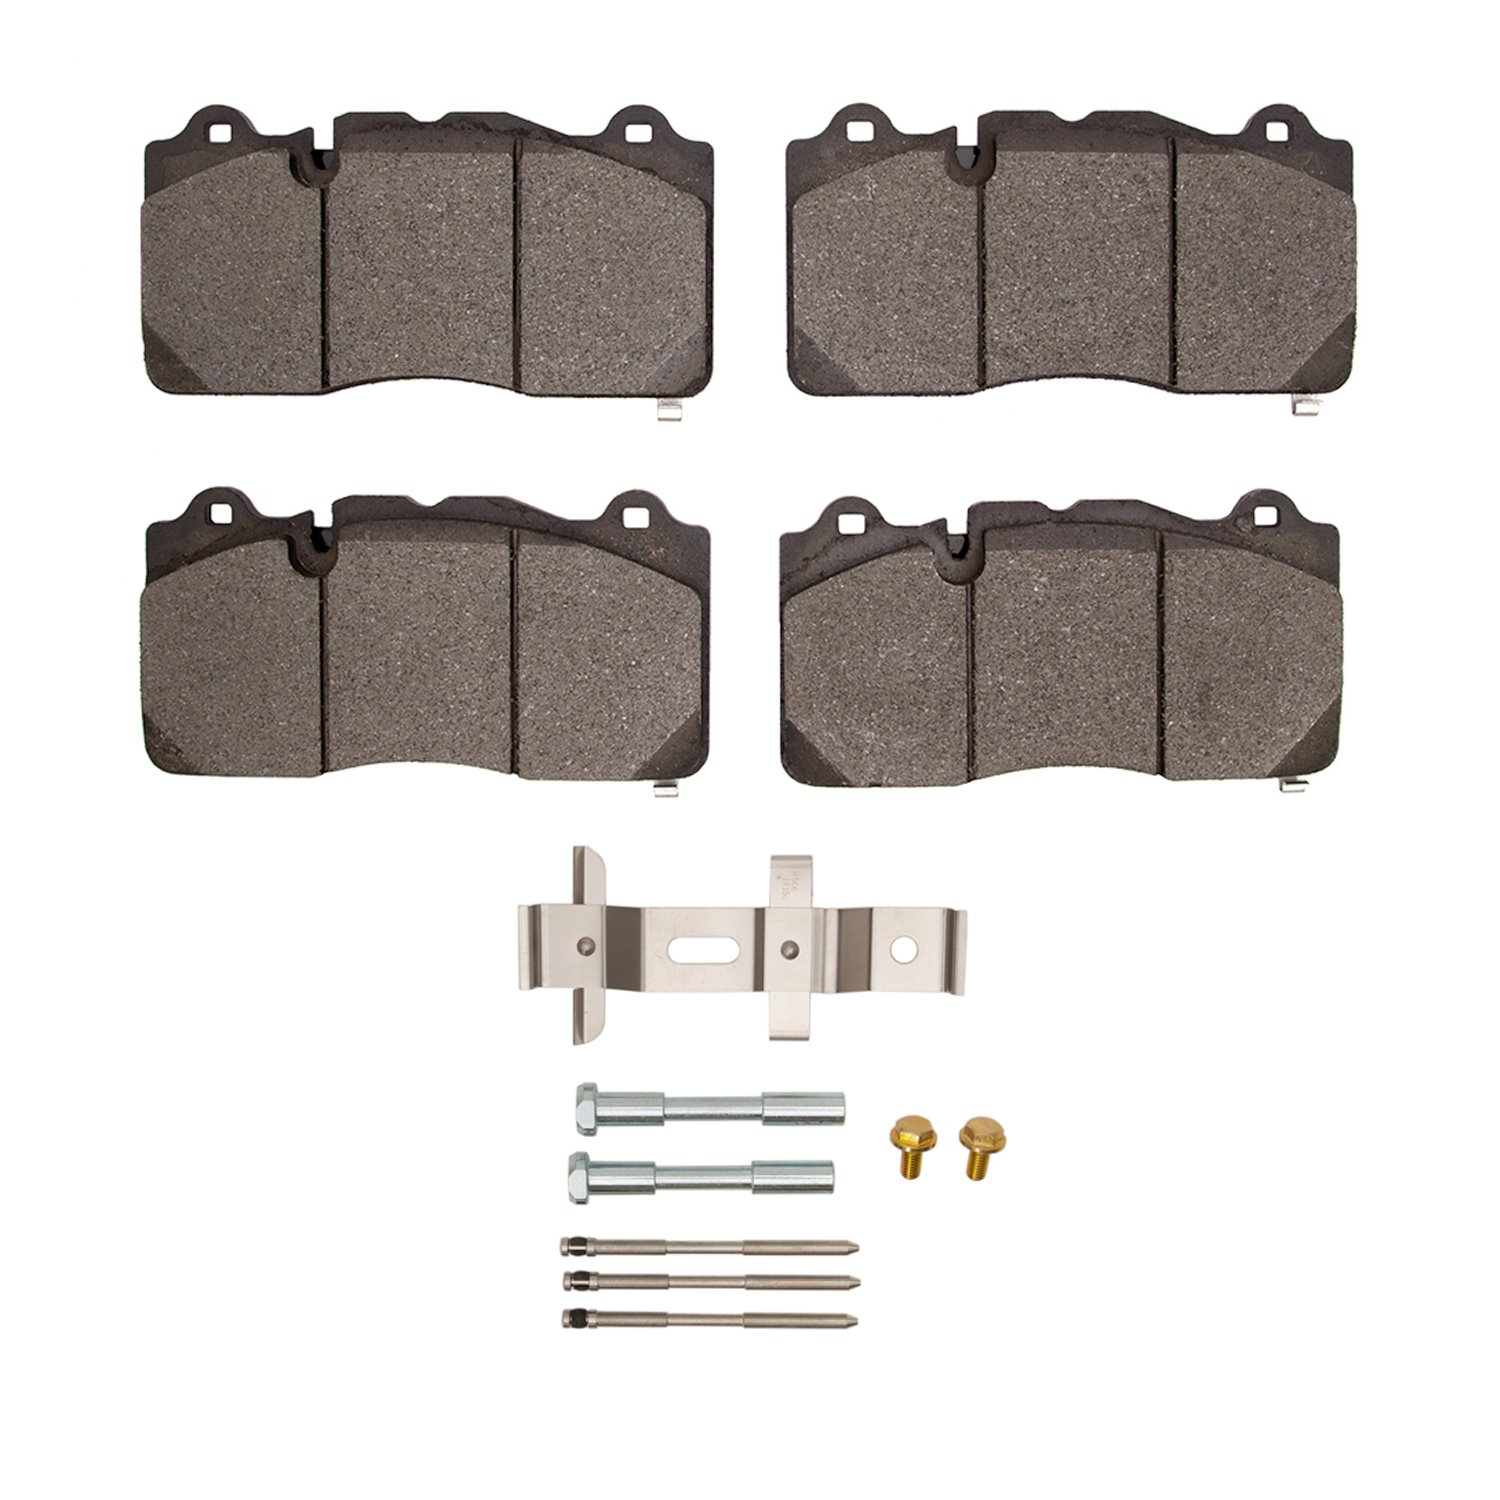 1310-1835-01 3000-Series Ceramic Brake Pads & Hardware Kit, Fits Select GM, Position: Front